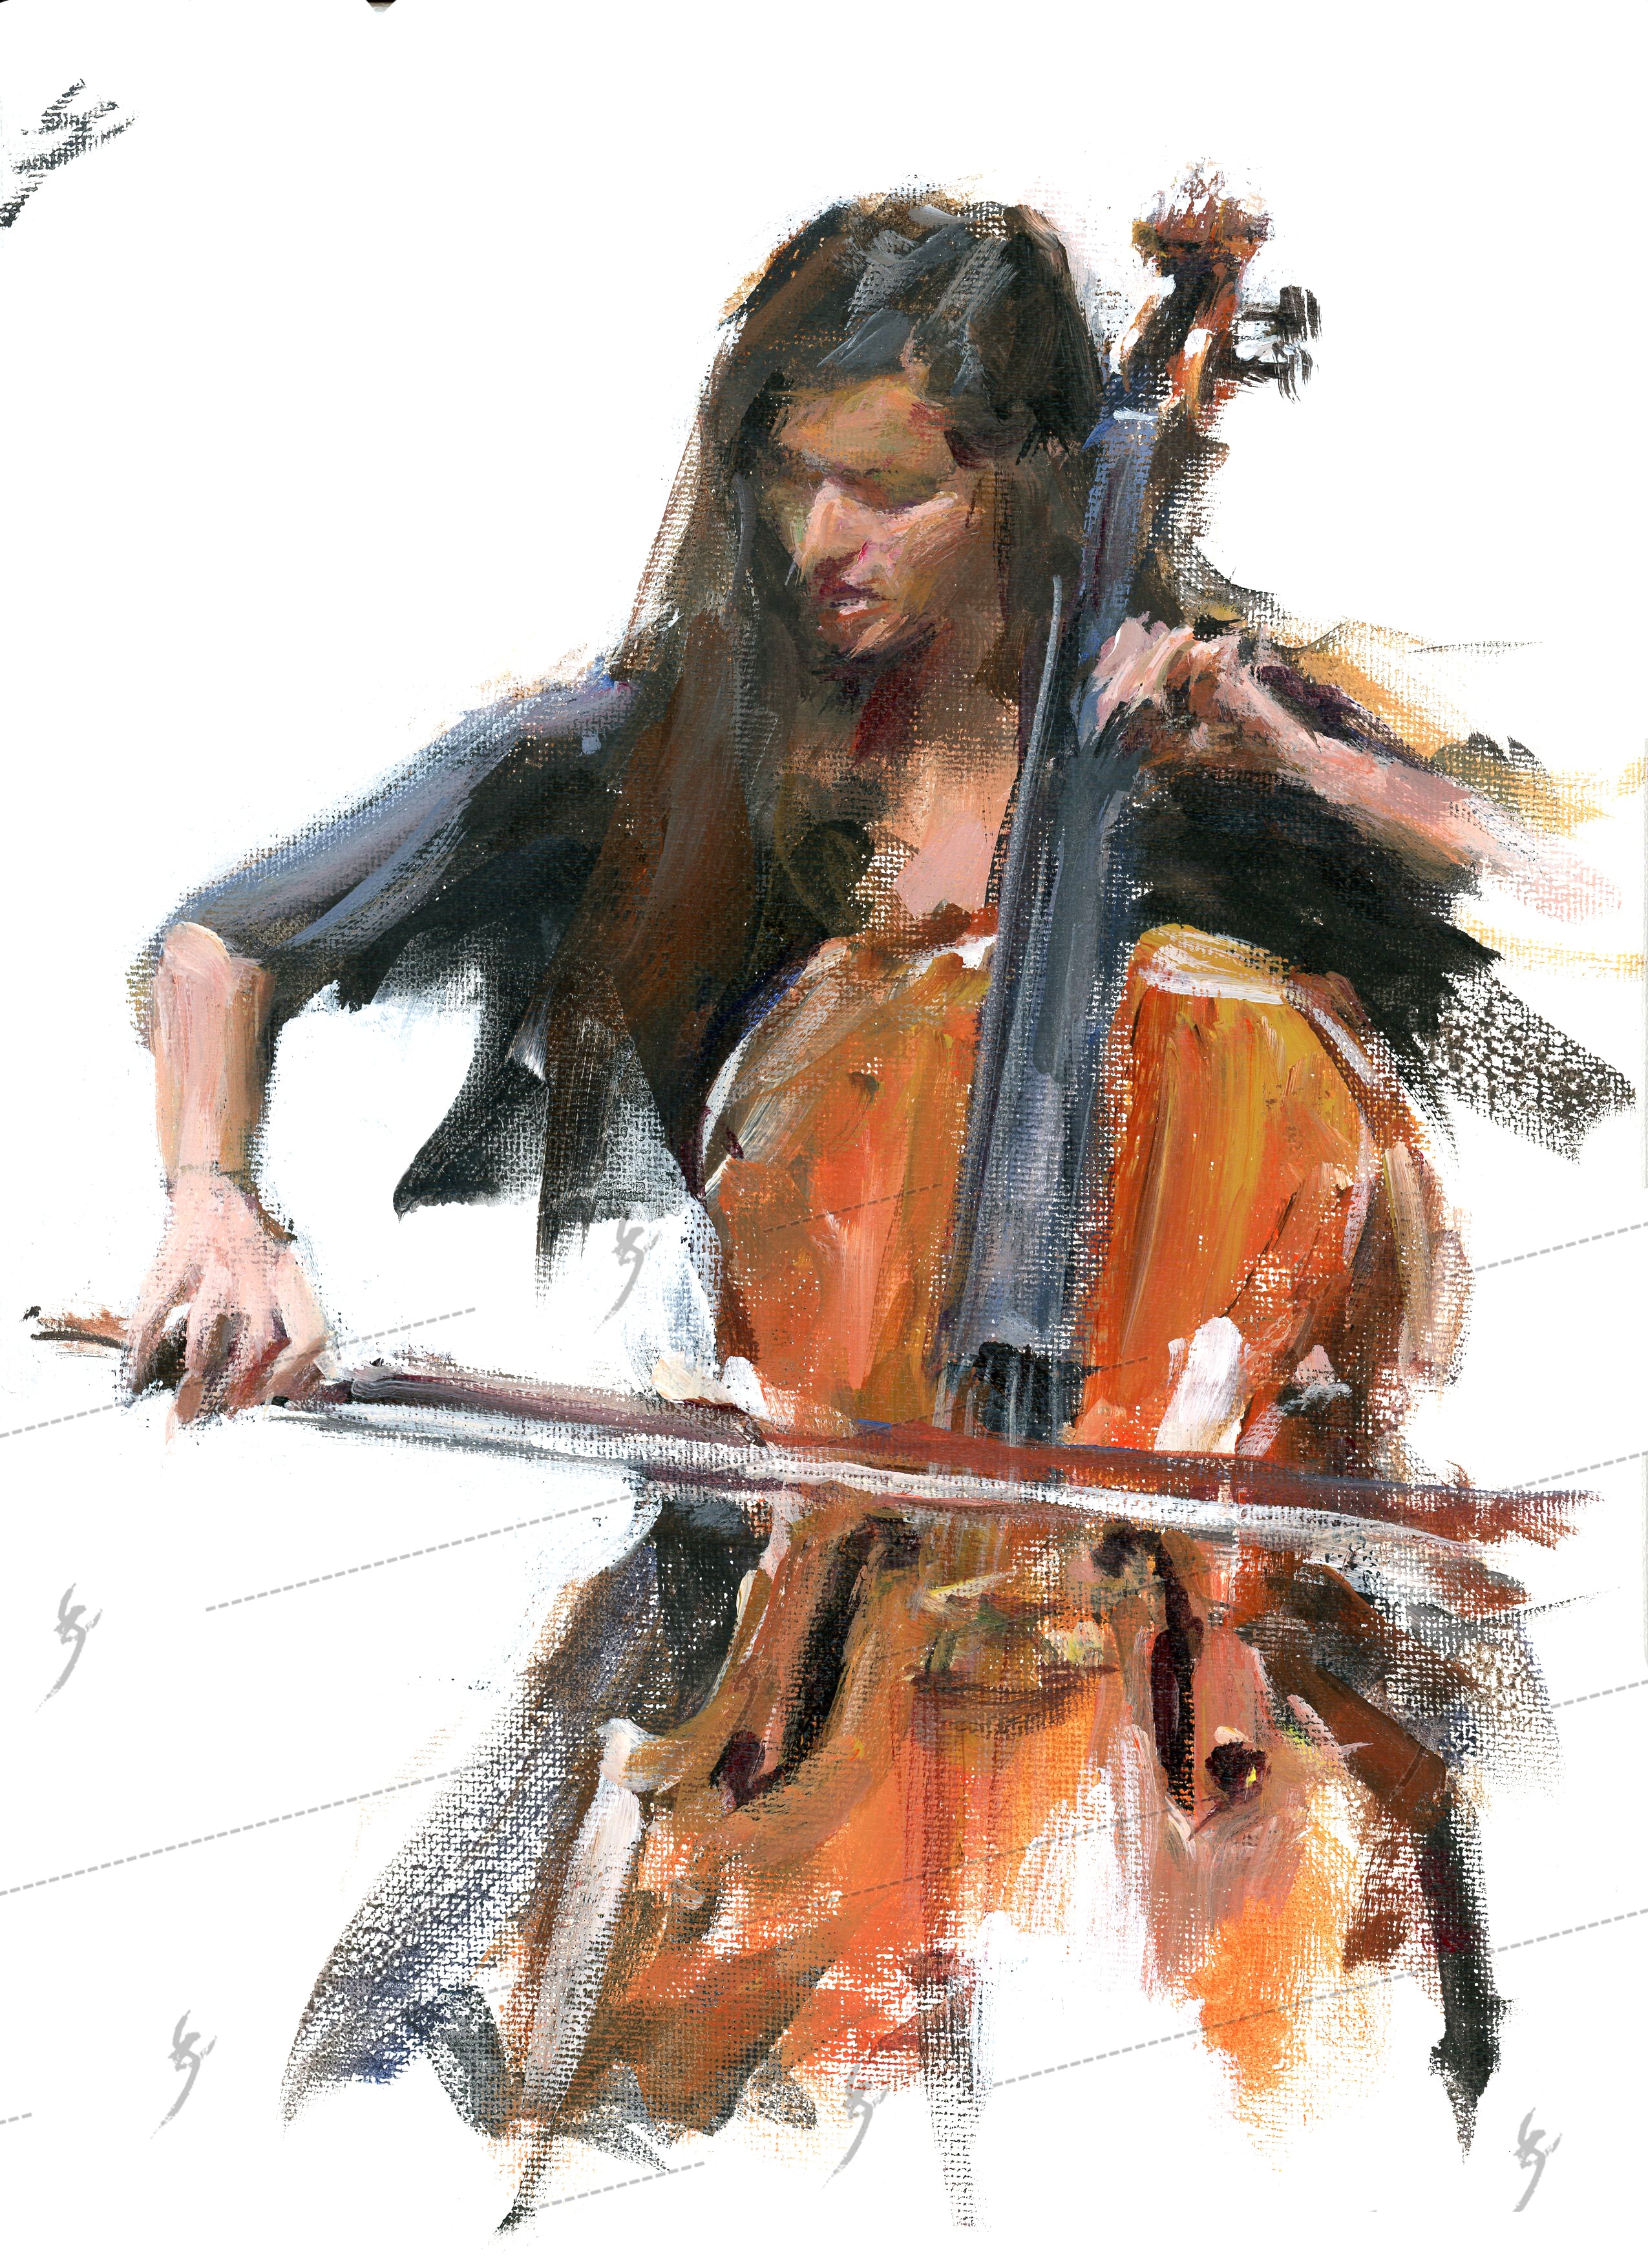 "Virtuosity" cello art Poster